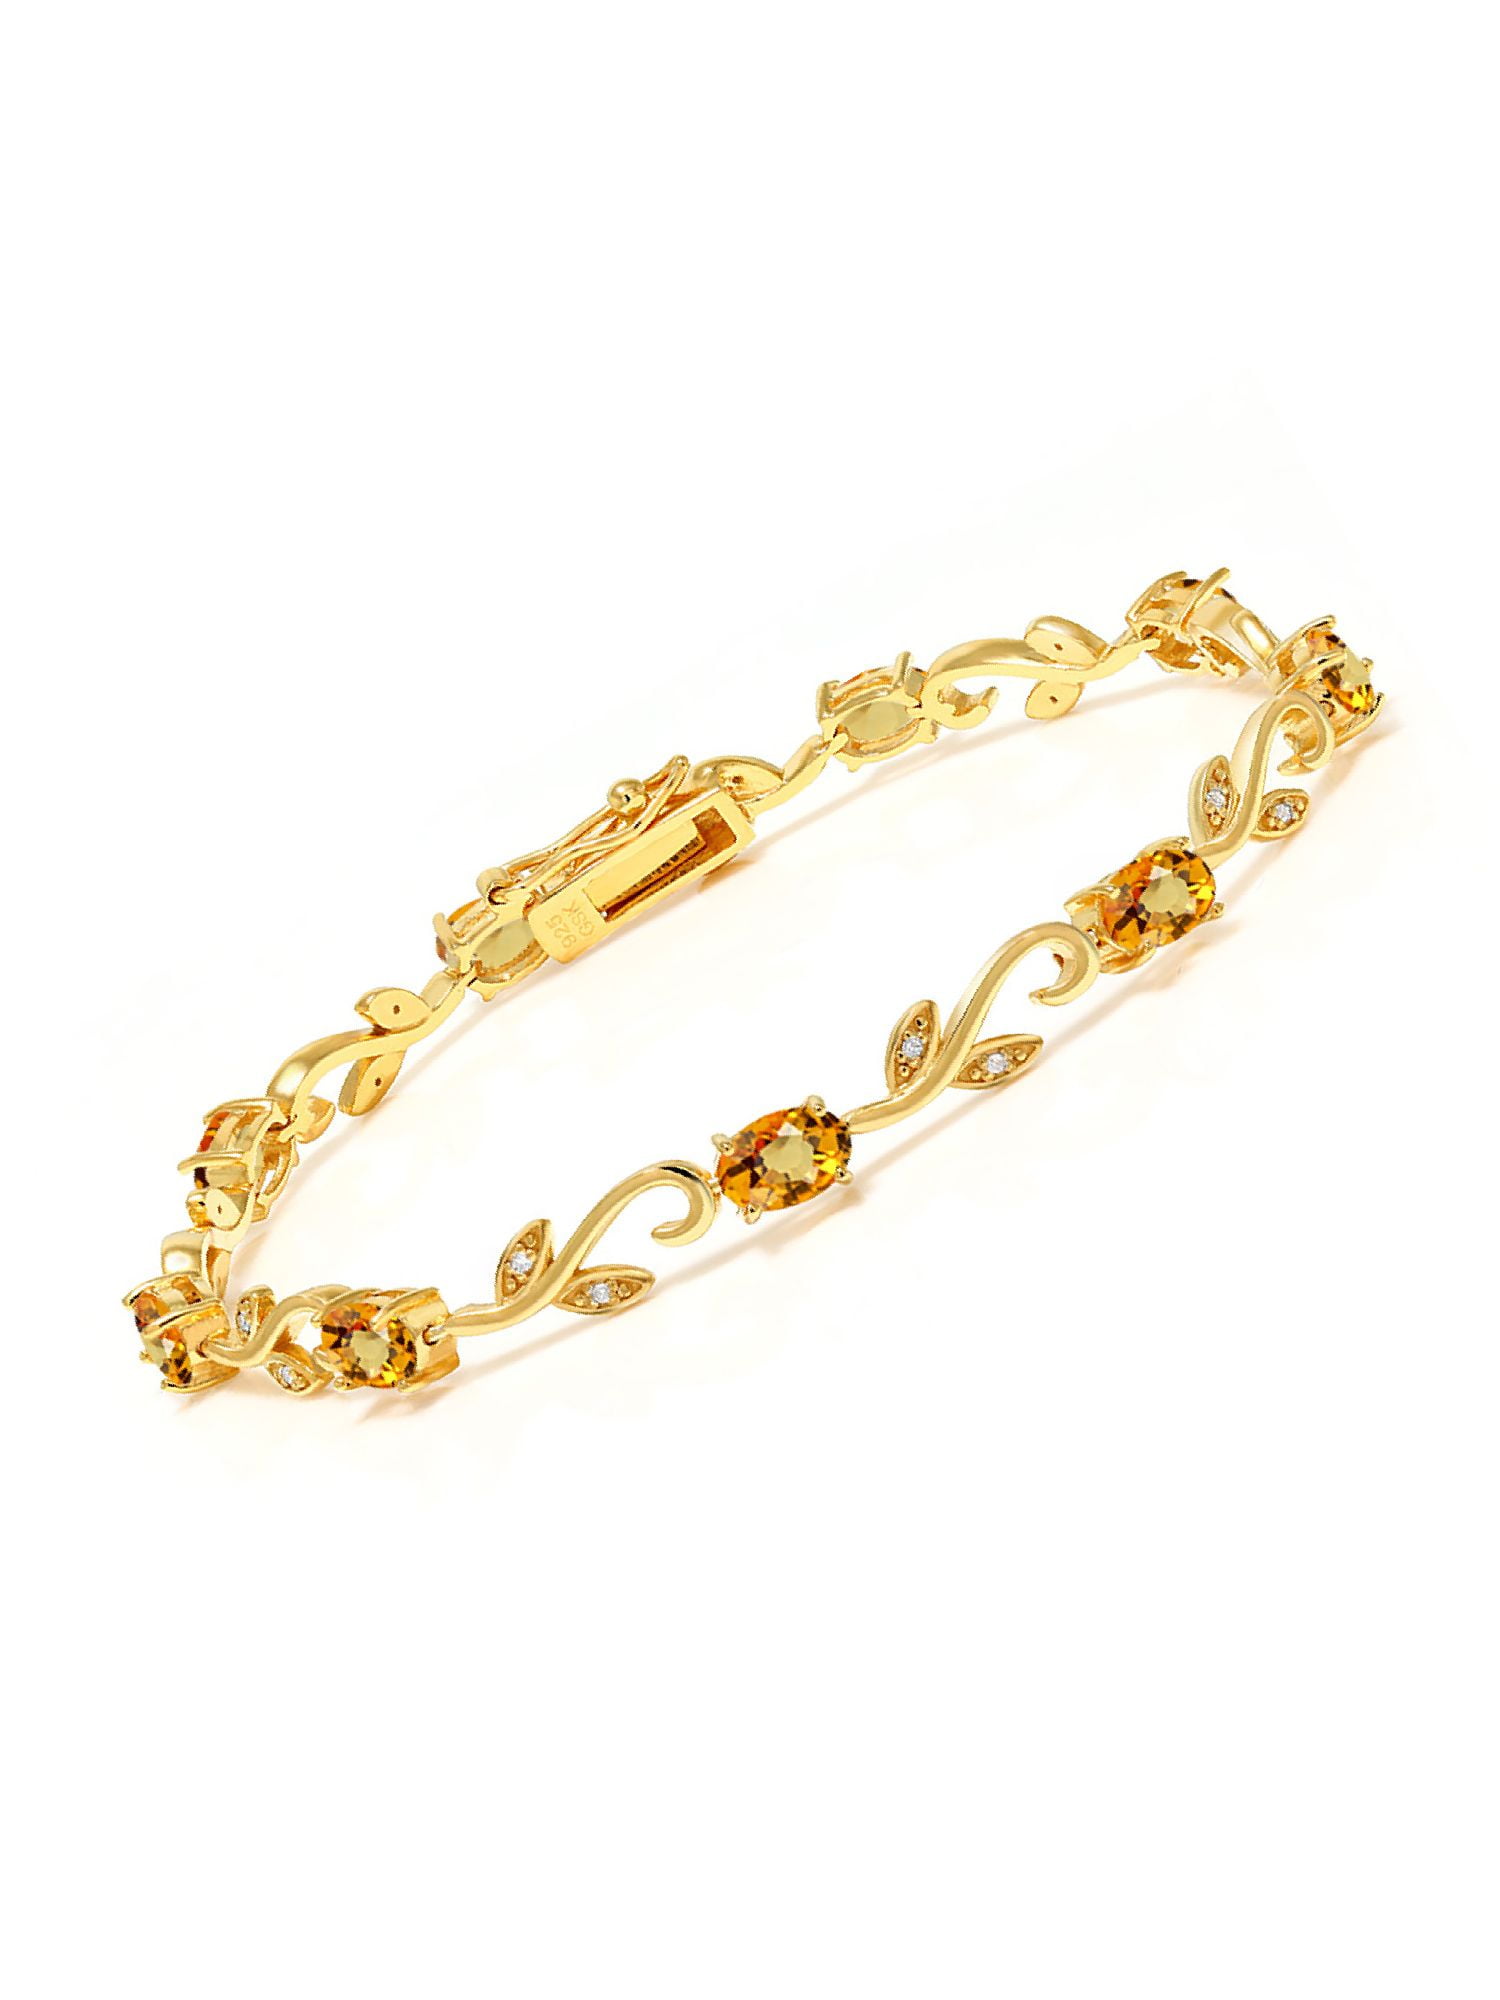 Radiant Cut Yellow Sapphire Bangle Bracelet for Women | SayaBling Jewelry